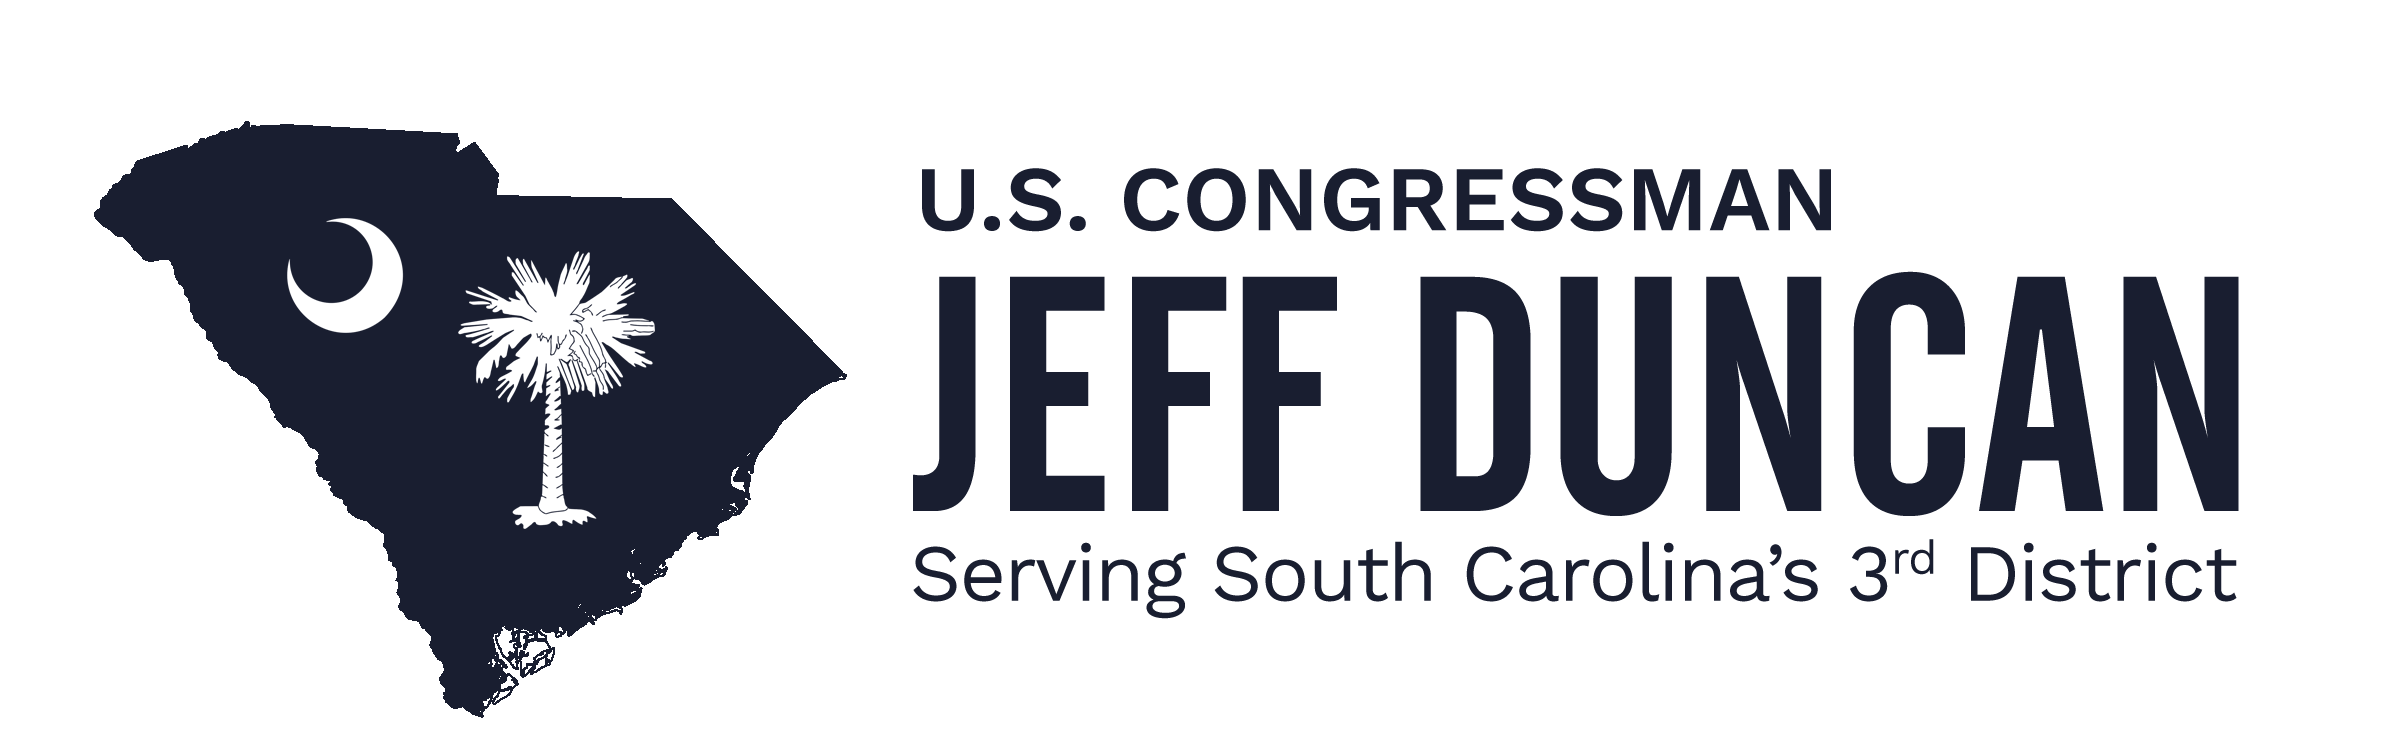 Congressman Jeff Duncan